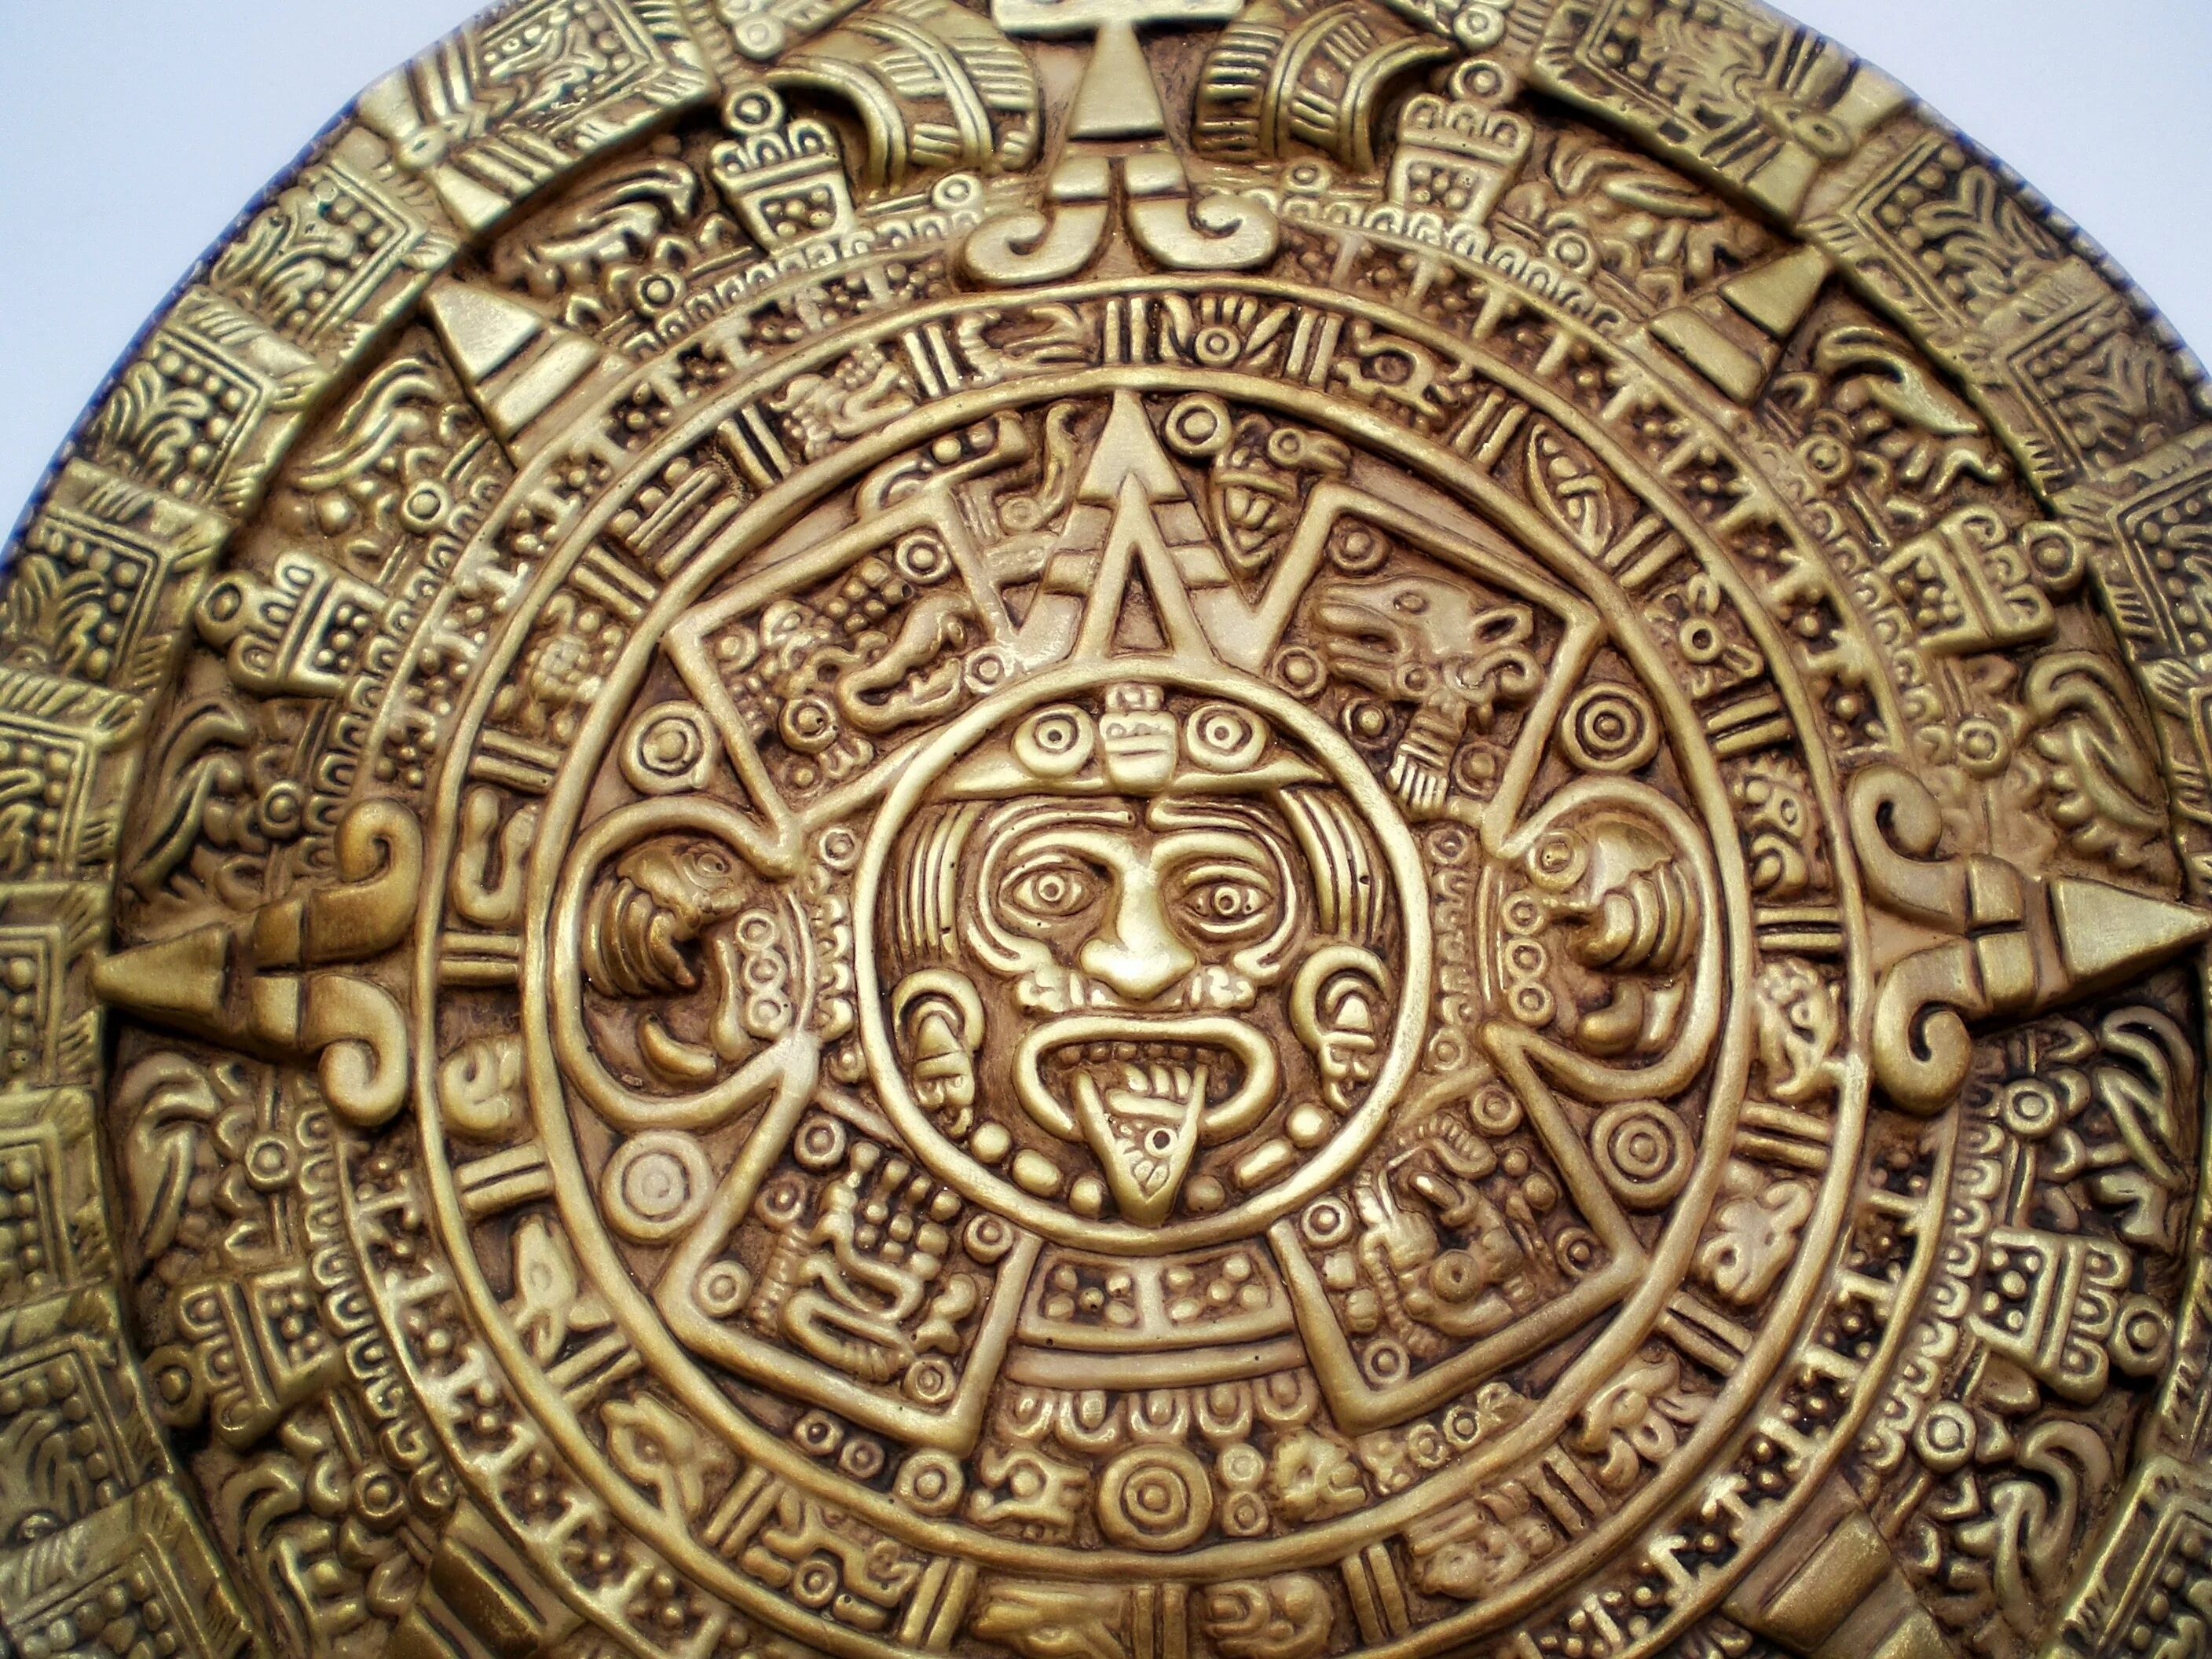 Календарь майя 23 мая. Солнечный календарь Майя. Календарь индейцев Майя. Камень солнца ацтеков. Календарный круг Майя.